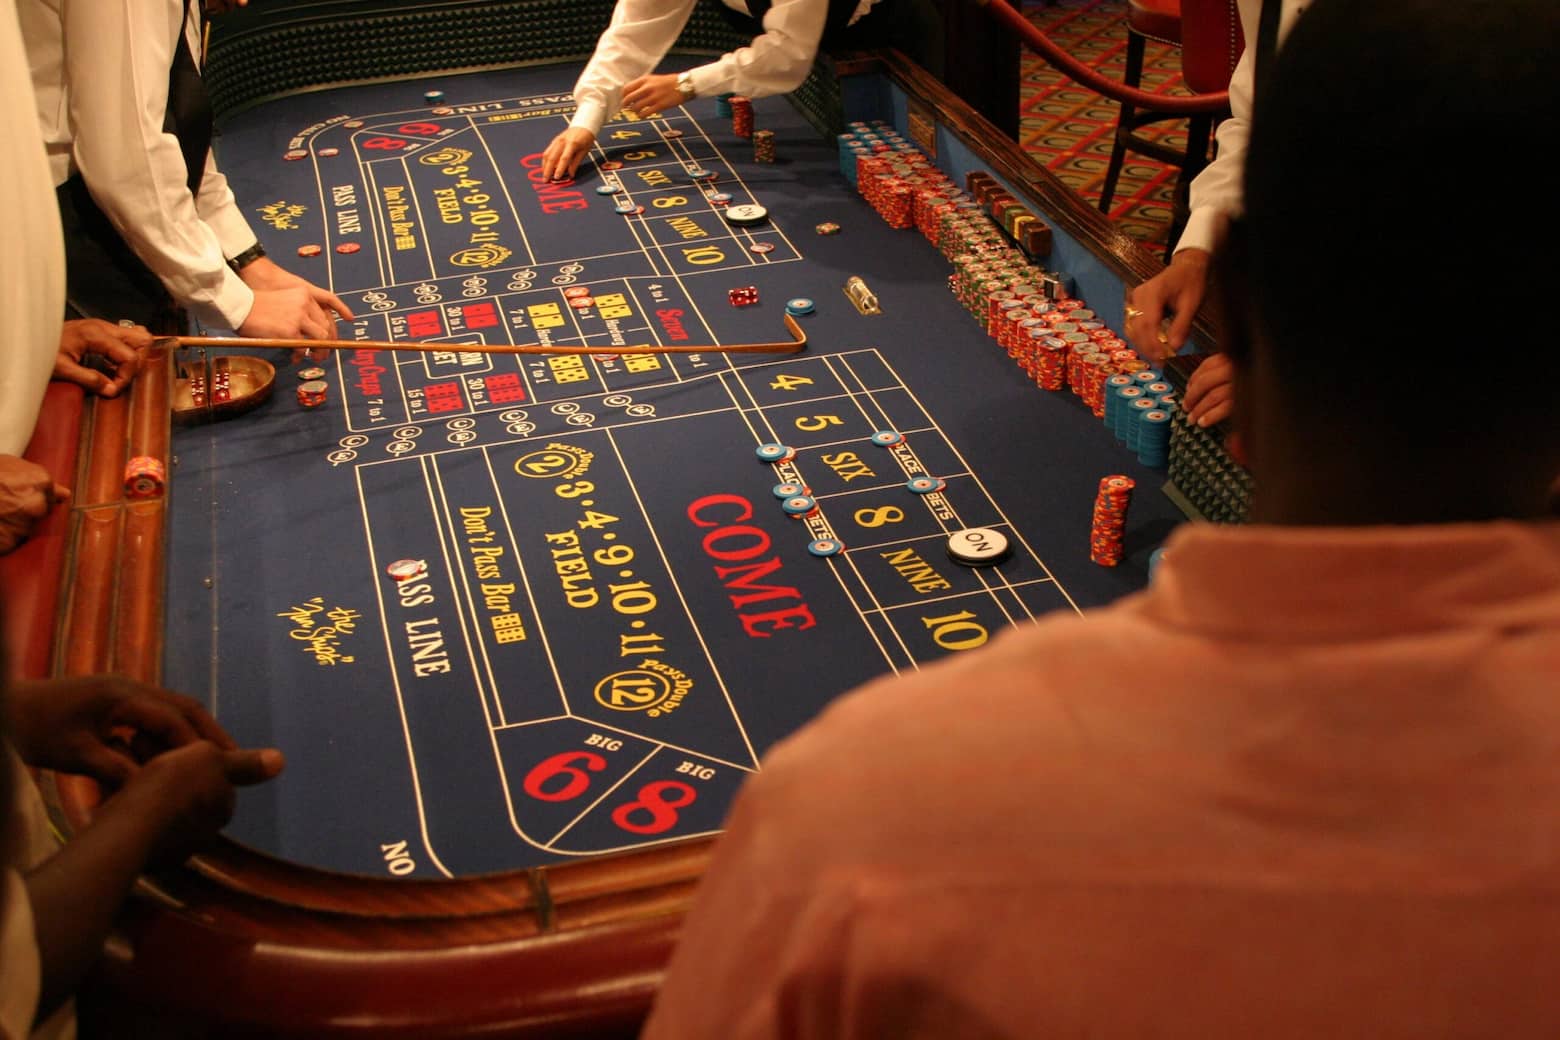 Top 5 melhores casinos in Brazil online para jogar os games da PG